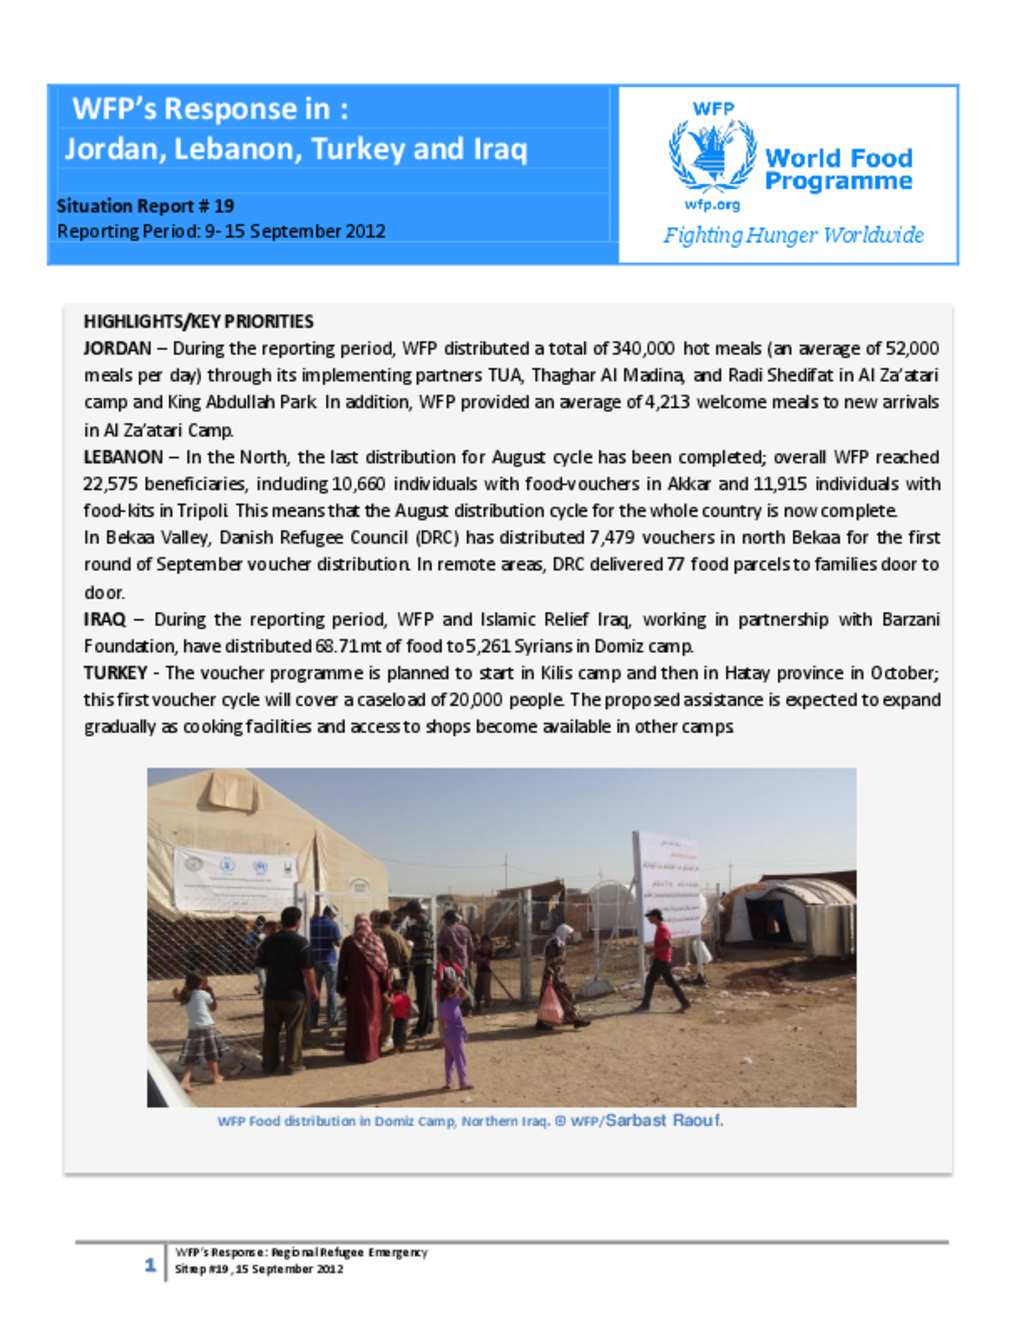 Document - WFP Response Inside and Neighbouring Countries: Jordan, Lebanon, Turkey Iraq Situation Report #